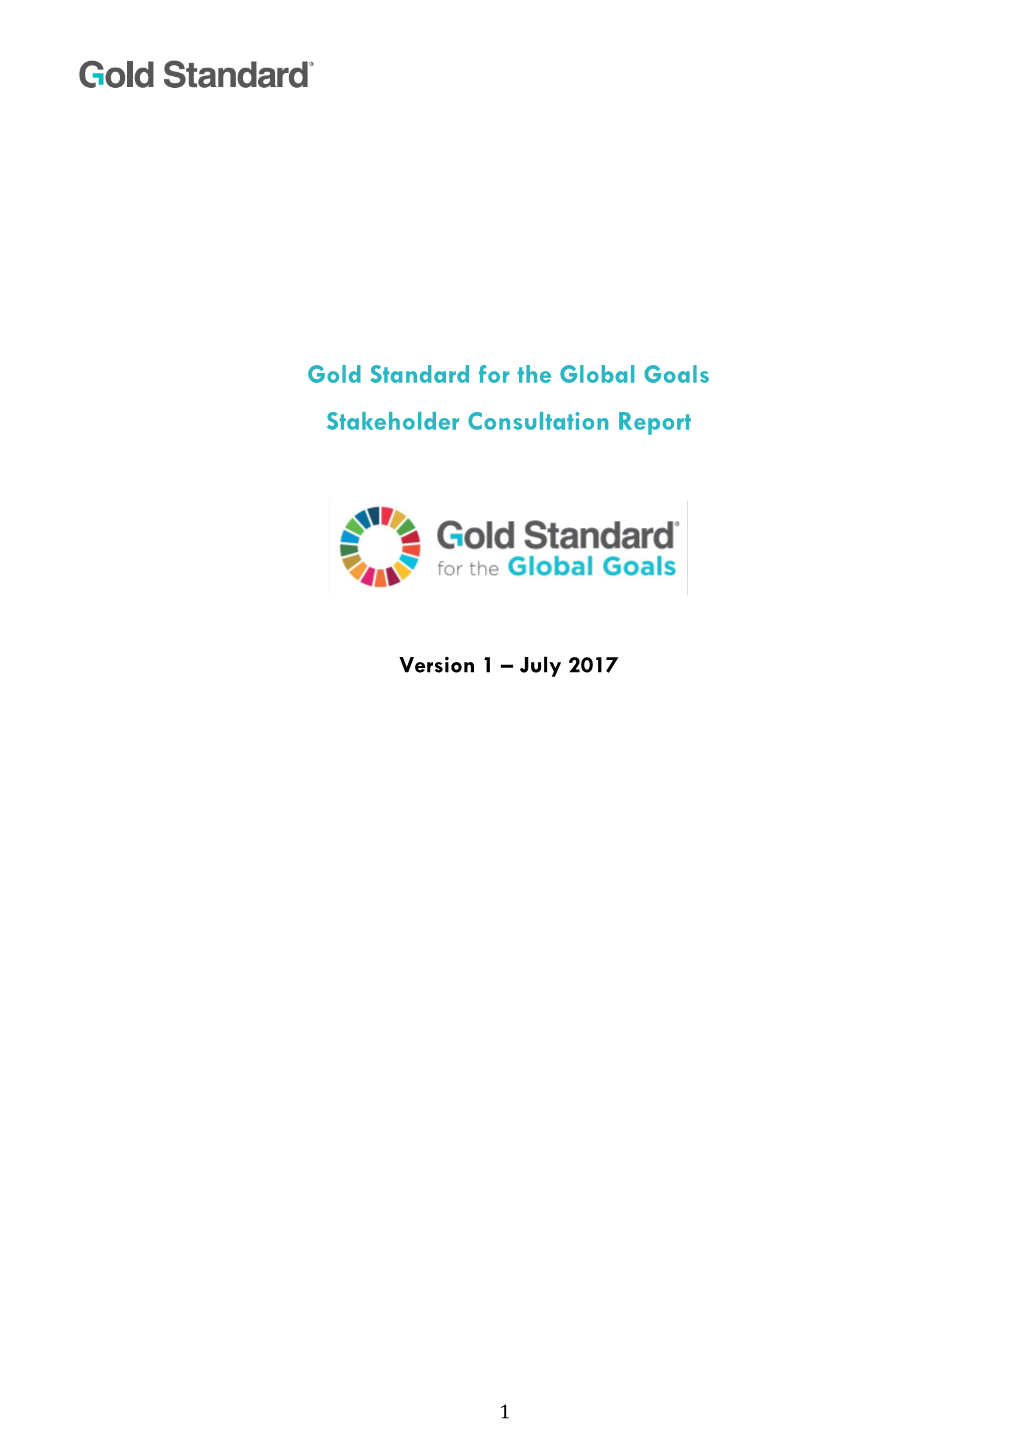 Gold Standard for the Global Goals Stakeholder Consultation Report